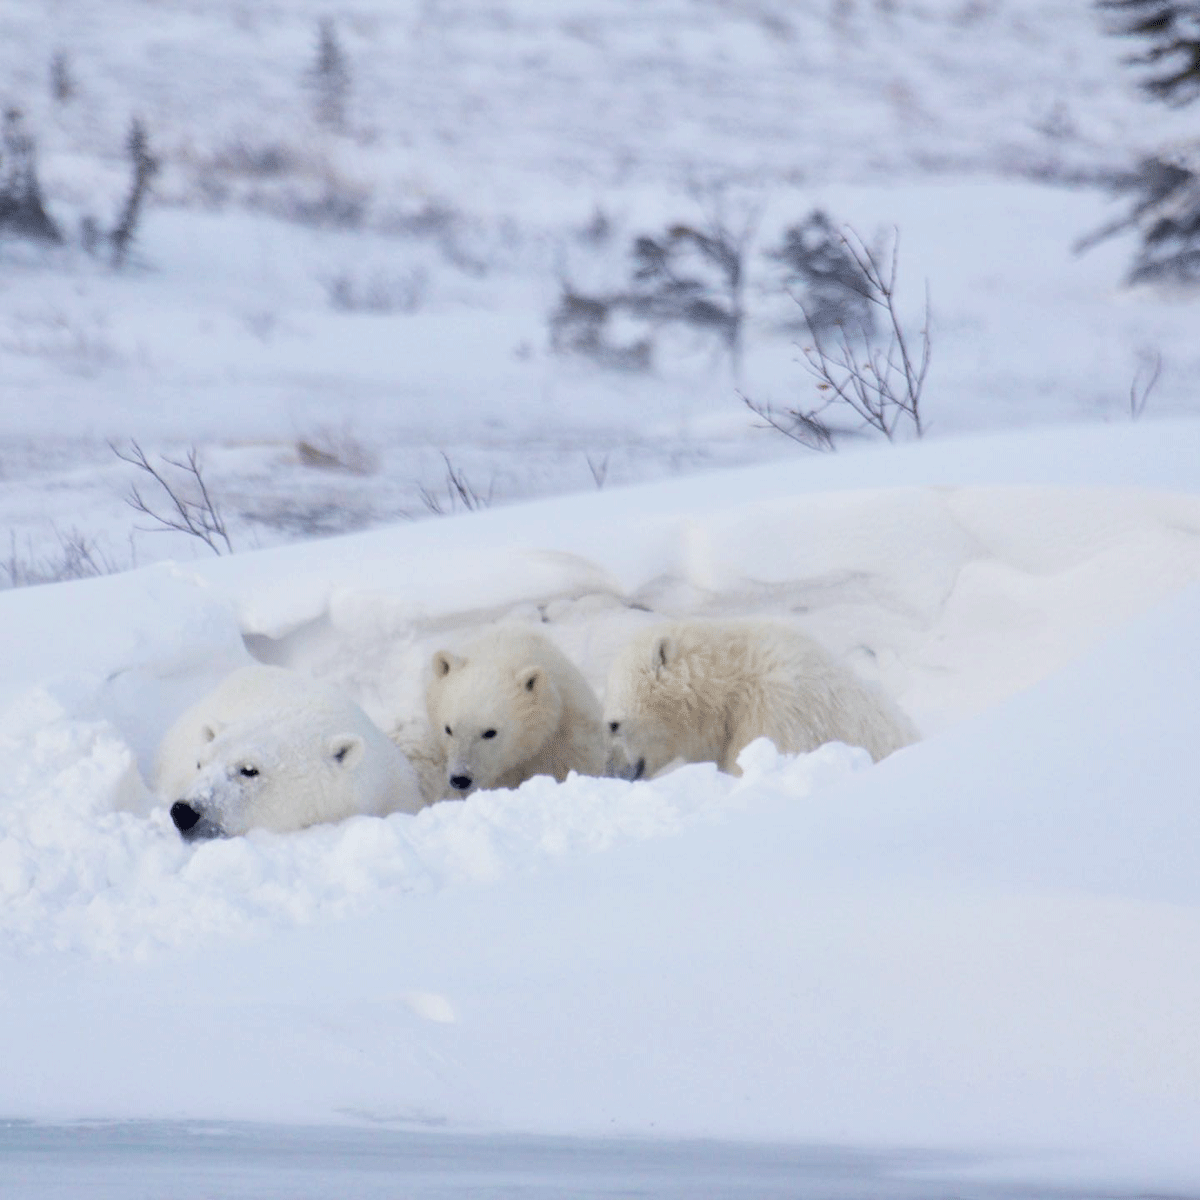 Polar bear family. Great Ice Bear Adventure. Dymond Lake Ecolodge. Eduard Planting photo.